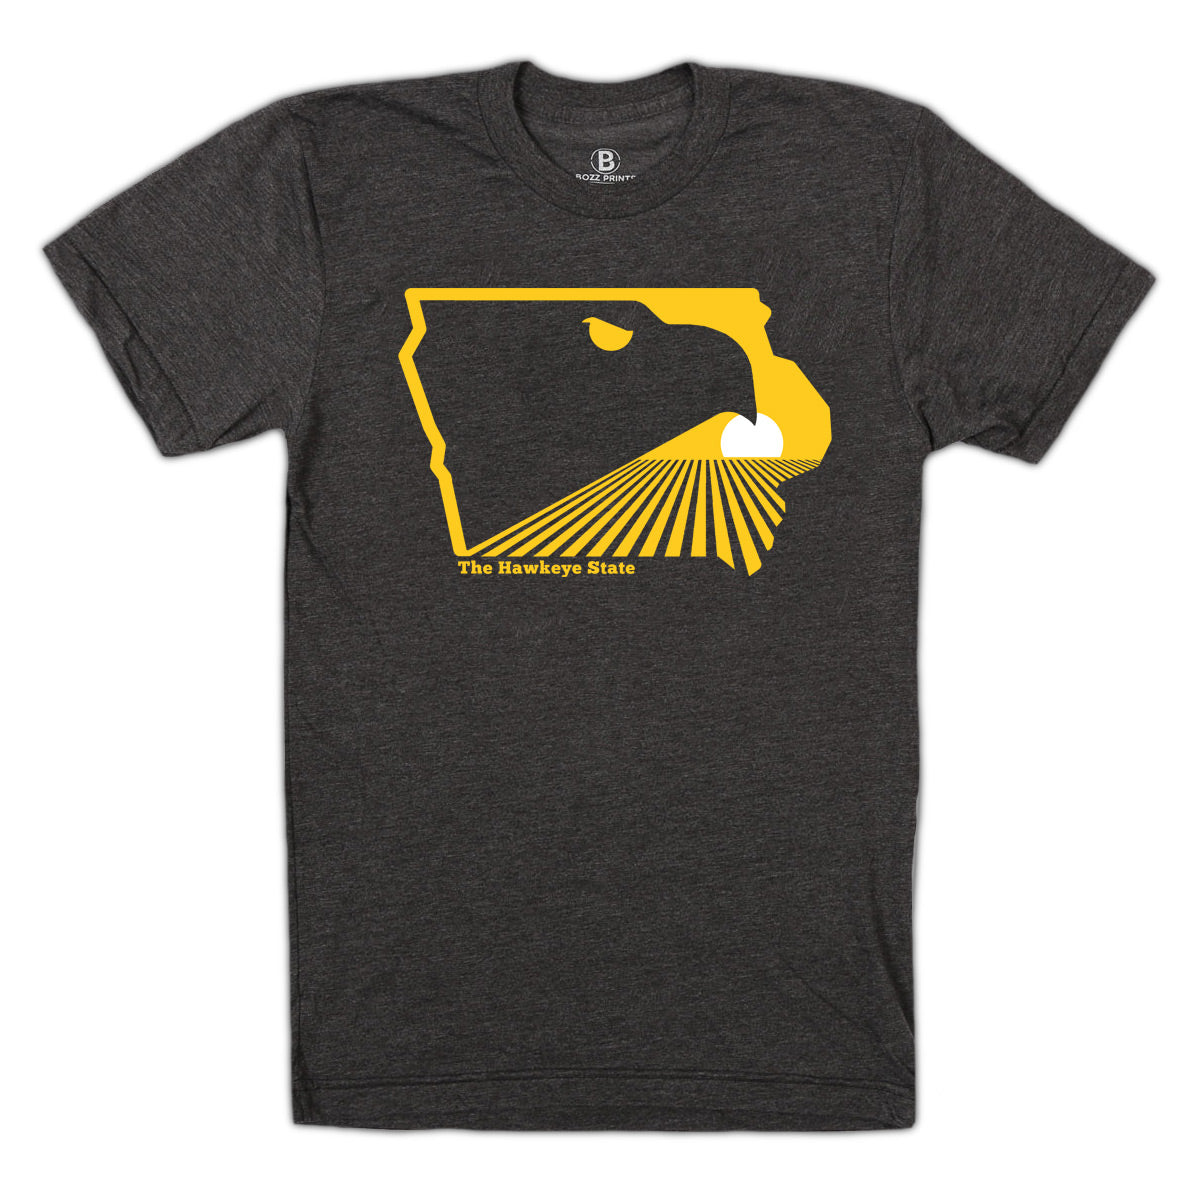 The Hawkeye State T-Shirt - Bozz Prints